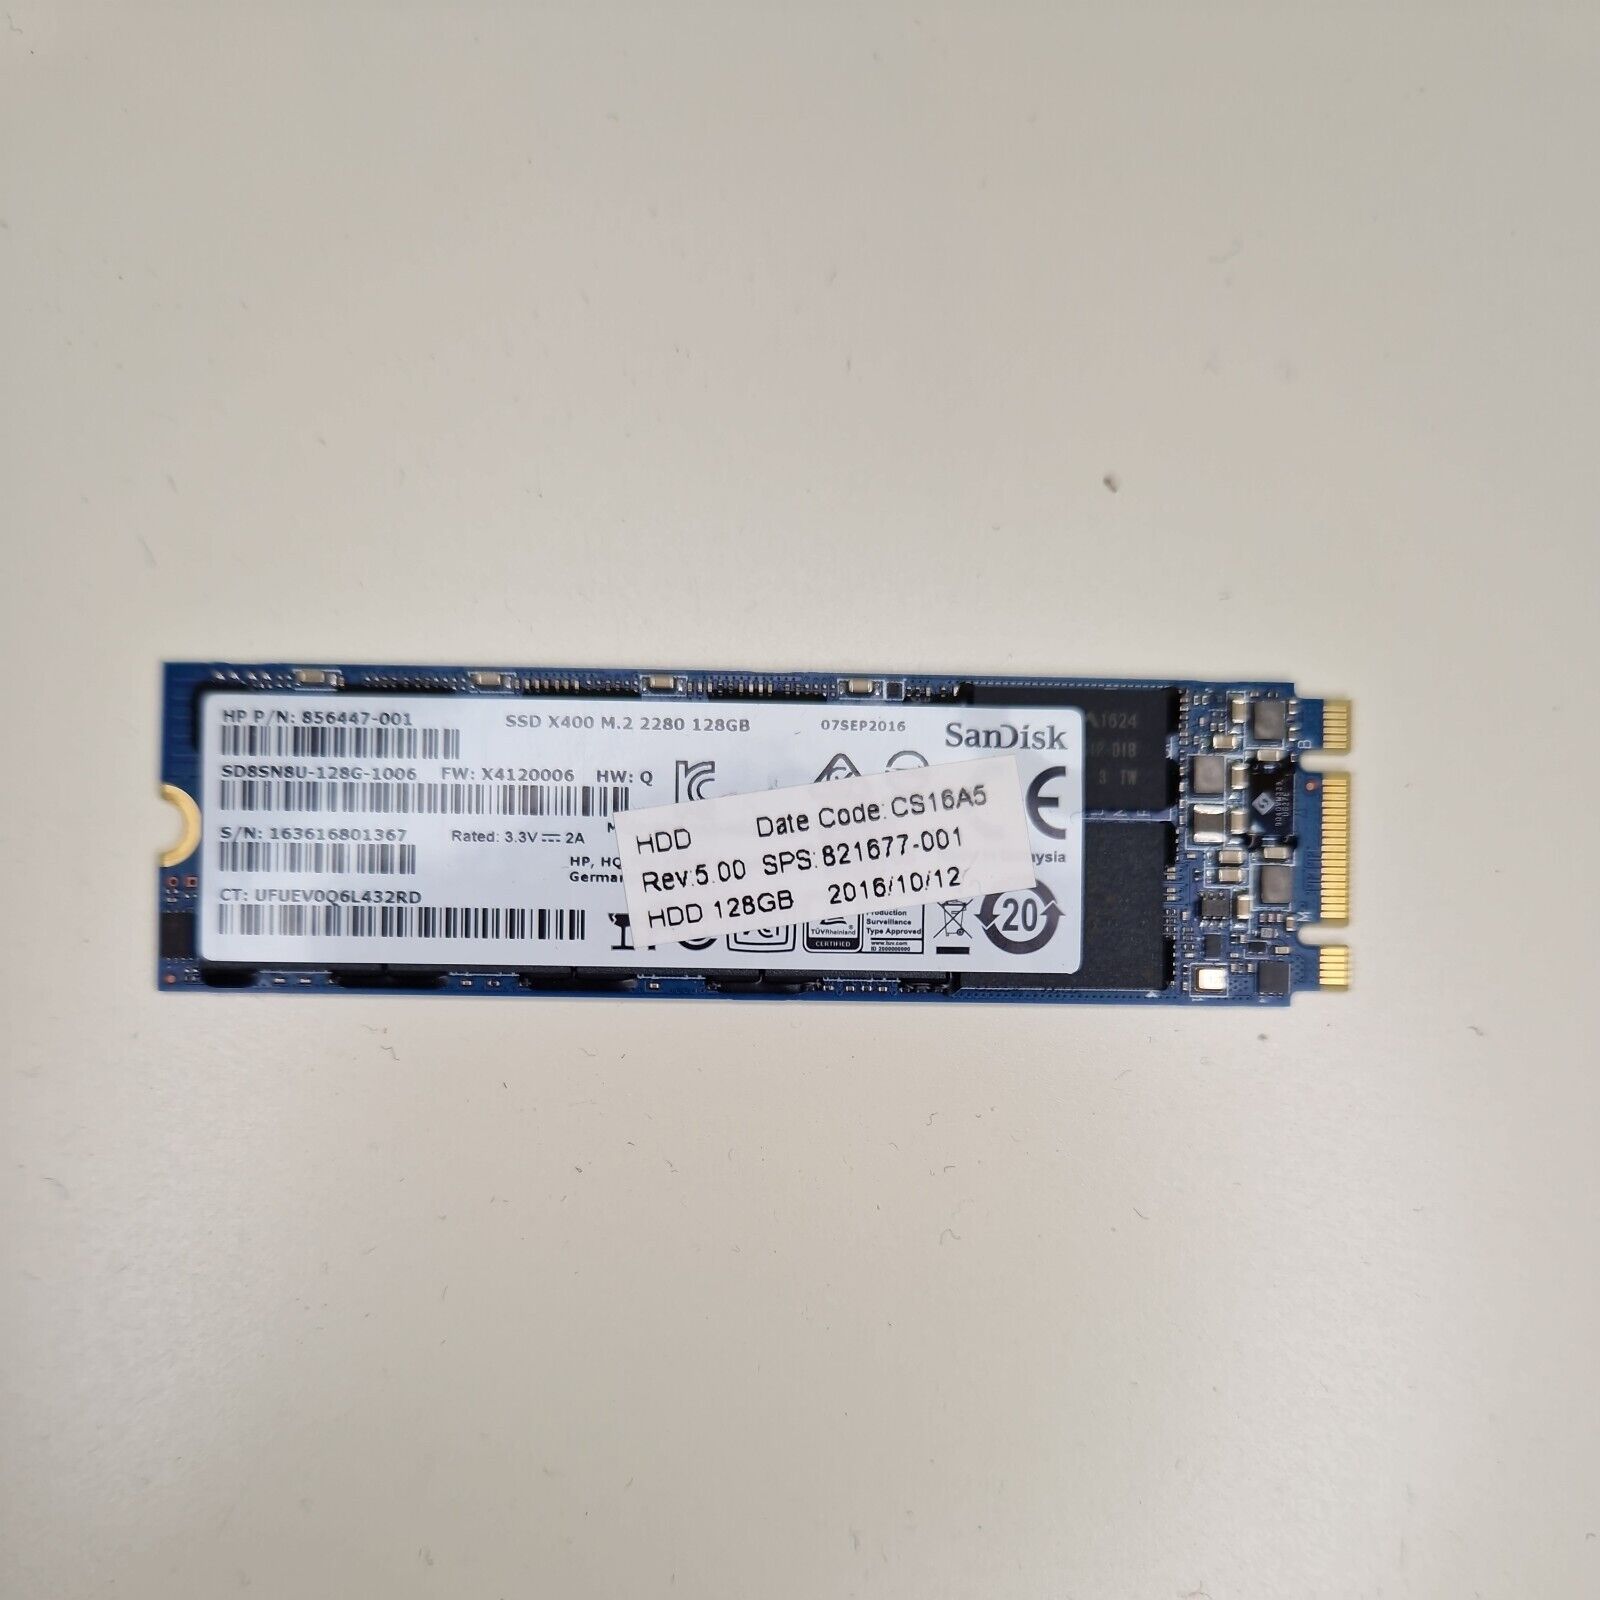 SanDisk SSD X400 M.2 2280 128GB Solid State Drive 856447-001 SD8SN8U-128G-1006